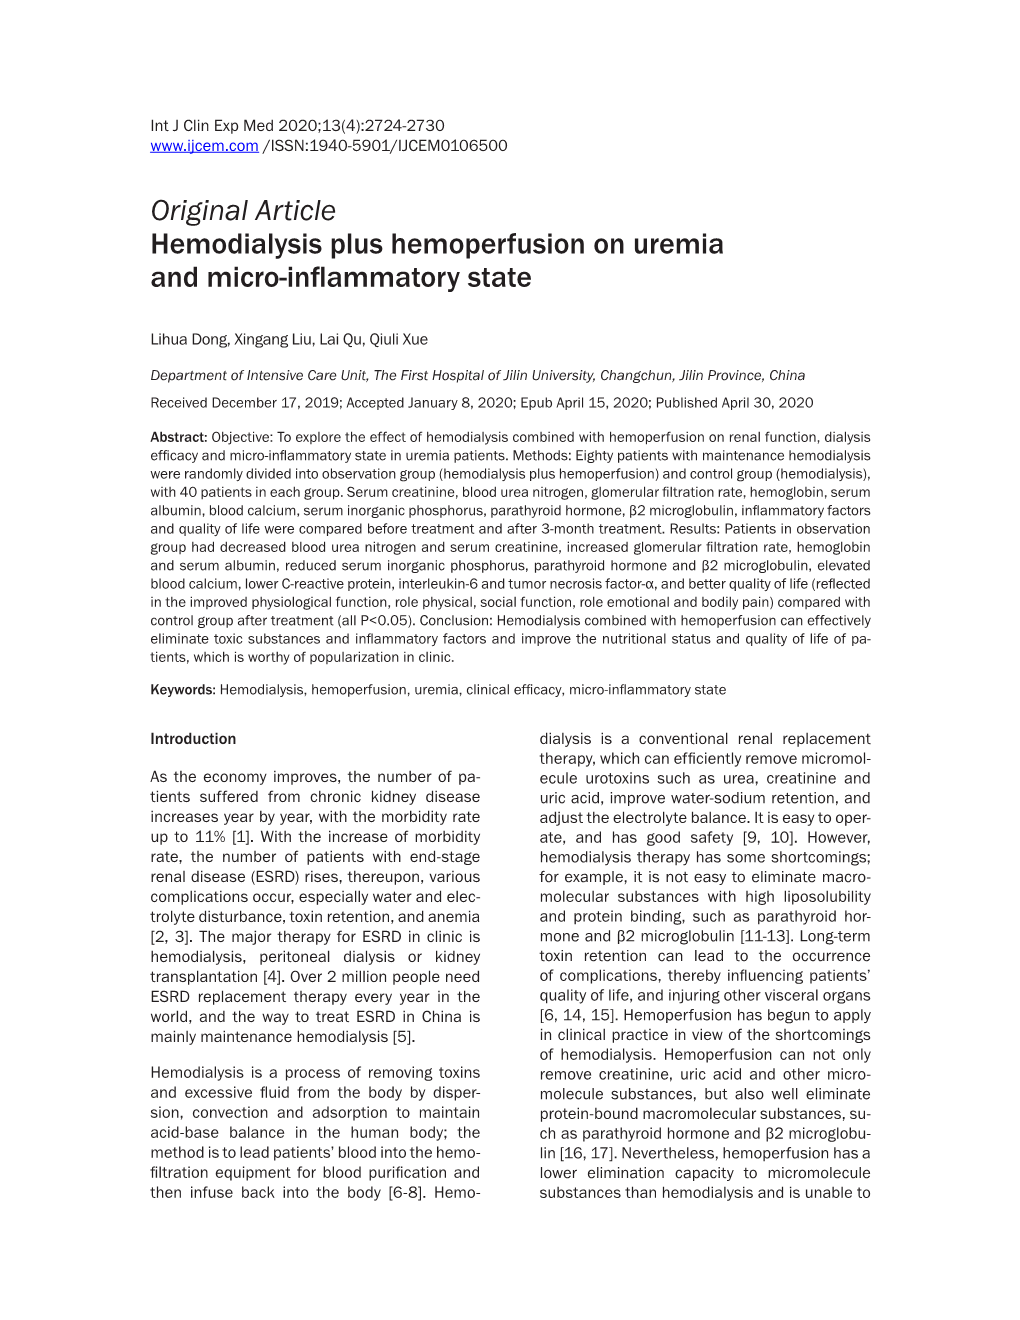 Original Article Hemodialysis Plus Hemoperfusion on Uremia and Micro-Inflammatory State